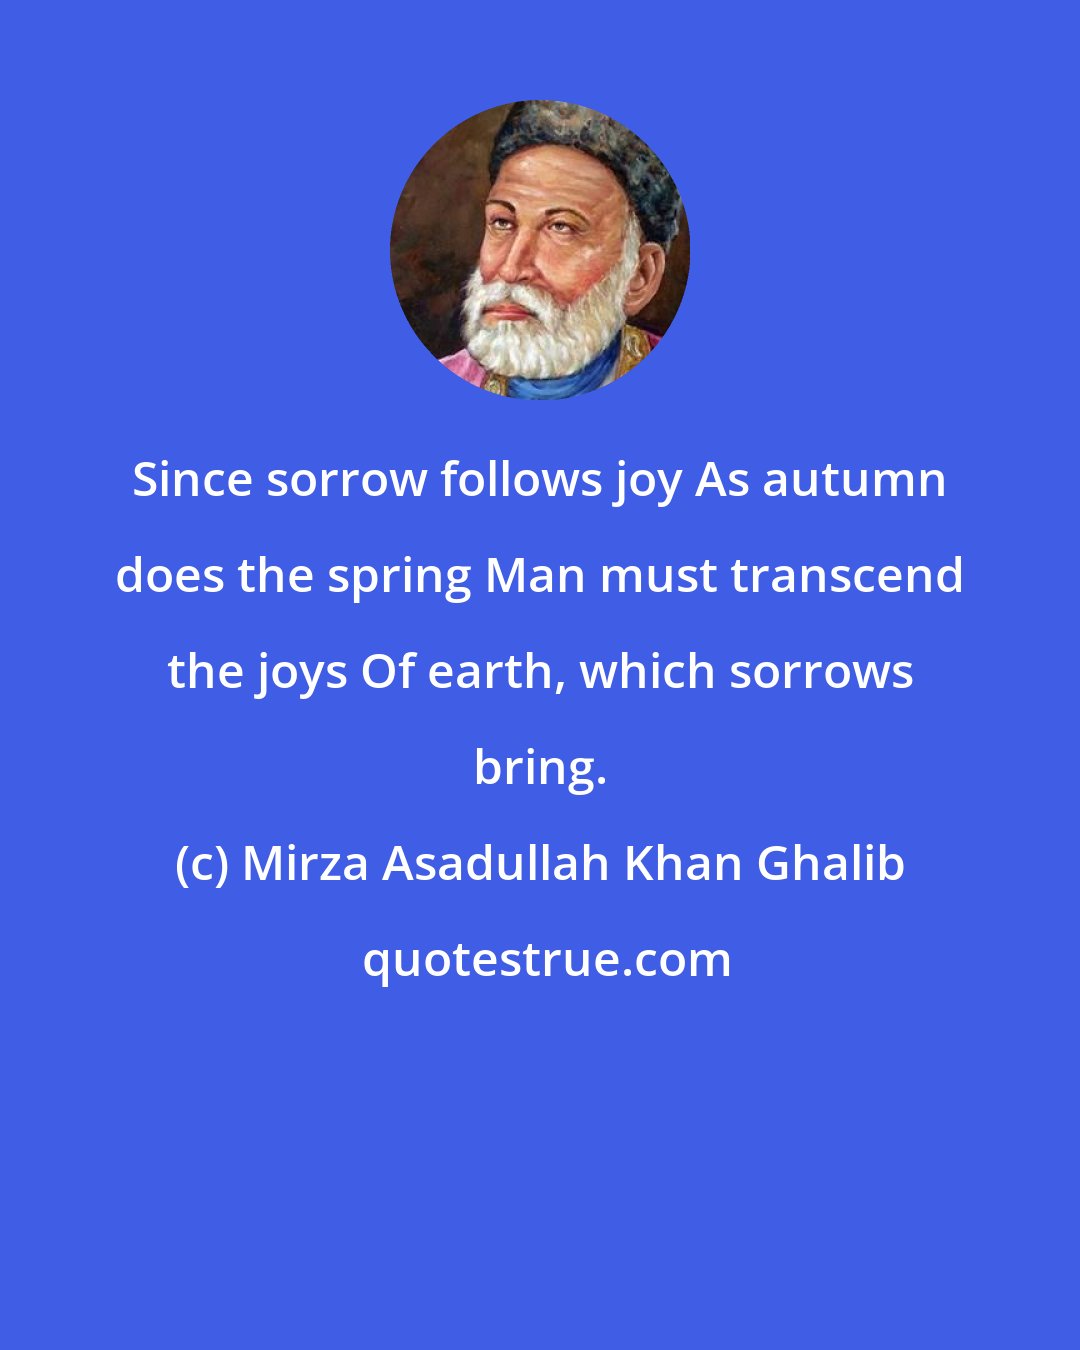 Mirza Asadullah Khan Ghalib: Since sorrow follows joy As autumn does the spring Man must transcend the joys Of earth, which sorrows bring.